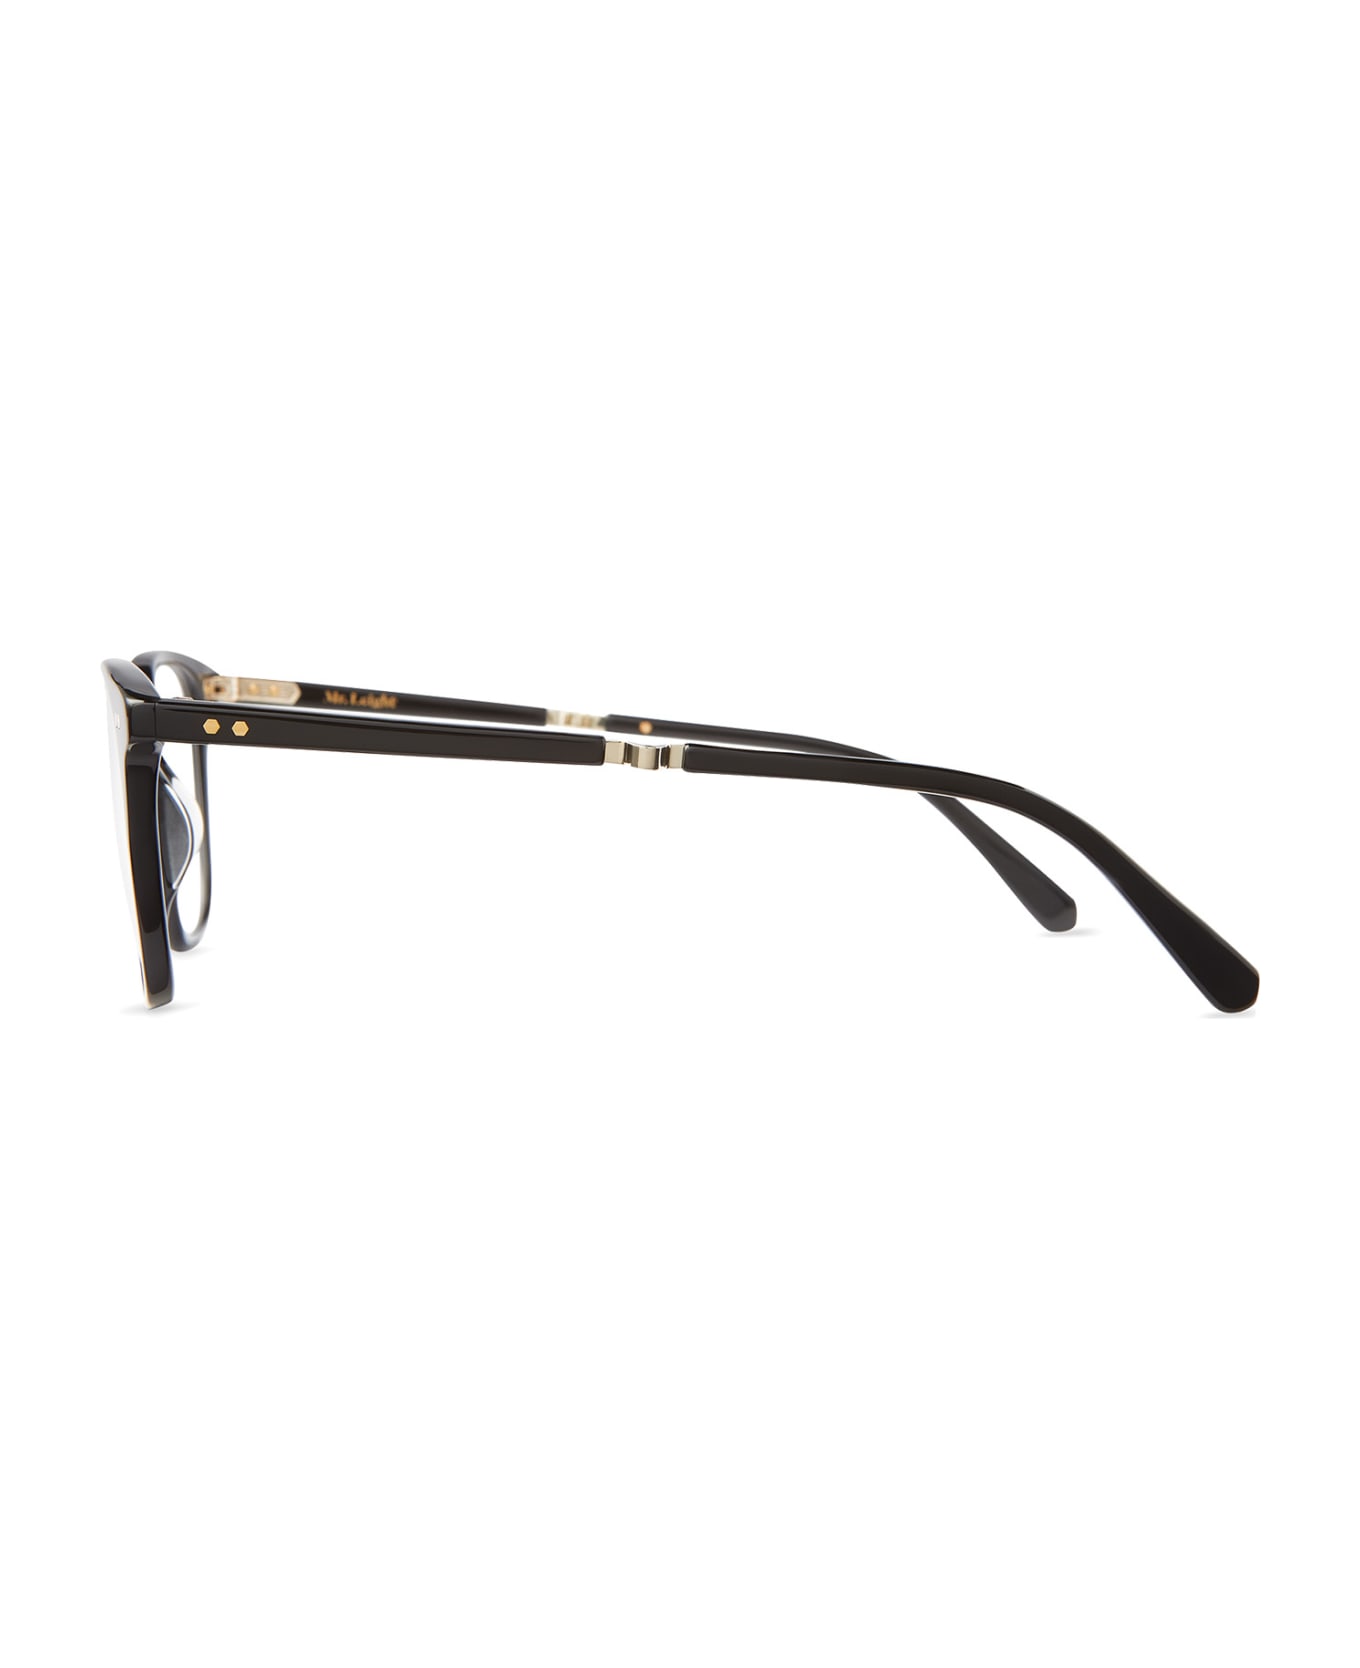 Mr. Leight Getty C Black-white Gold Glasses - Black-White Gold アイウェア